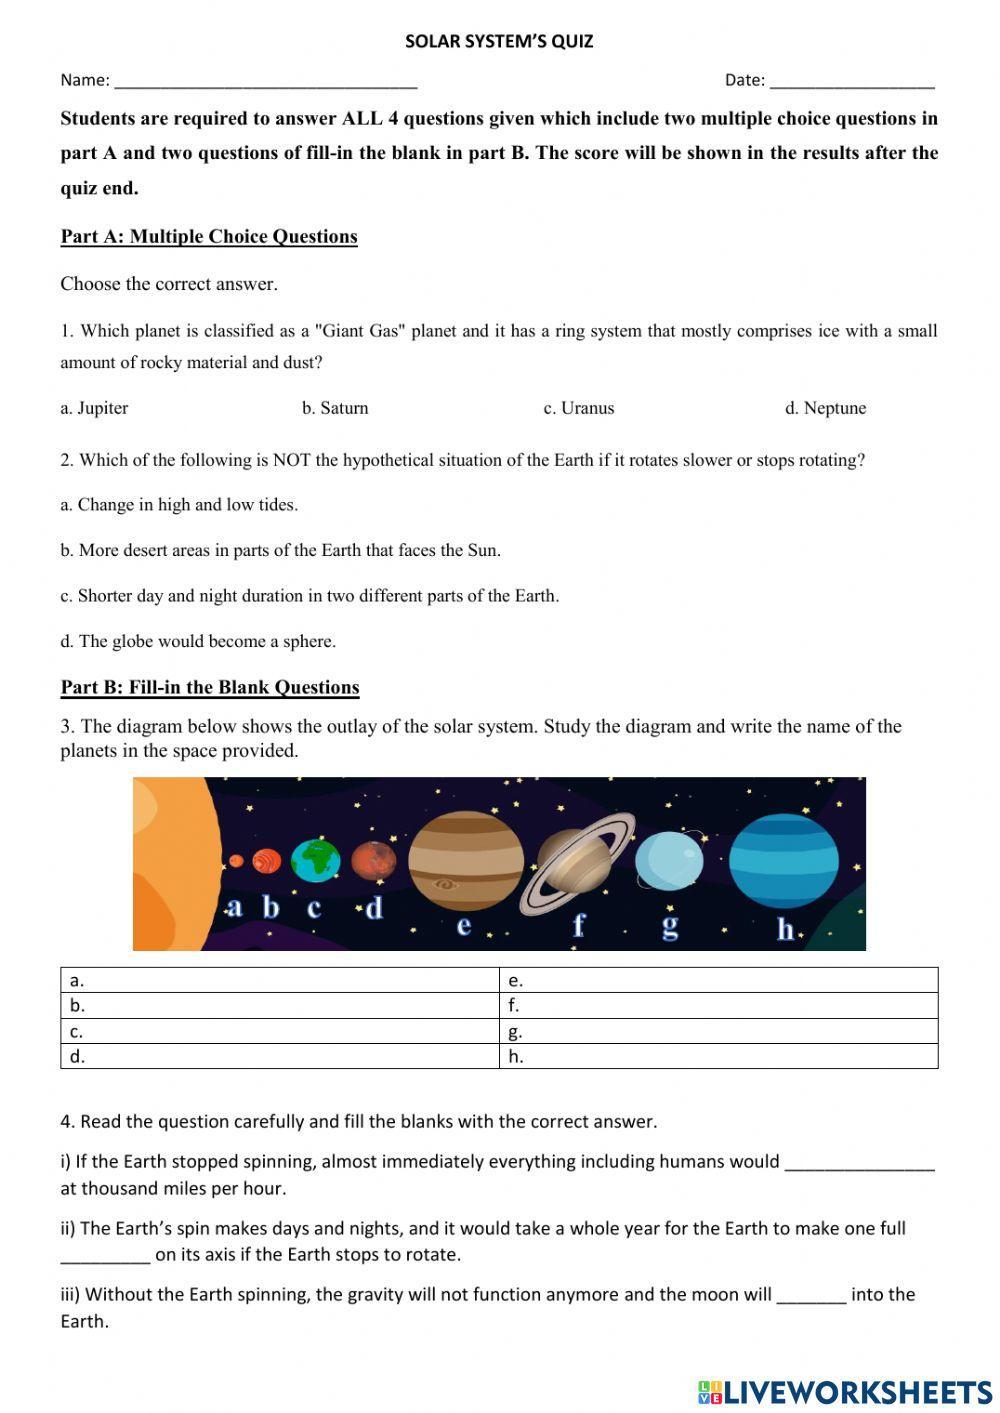 Solar System's Quiz